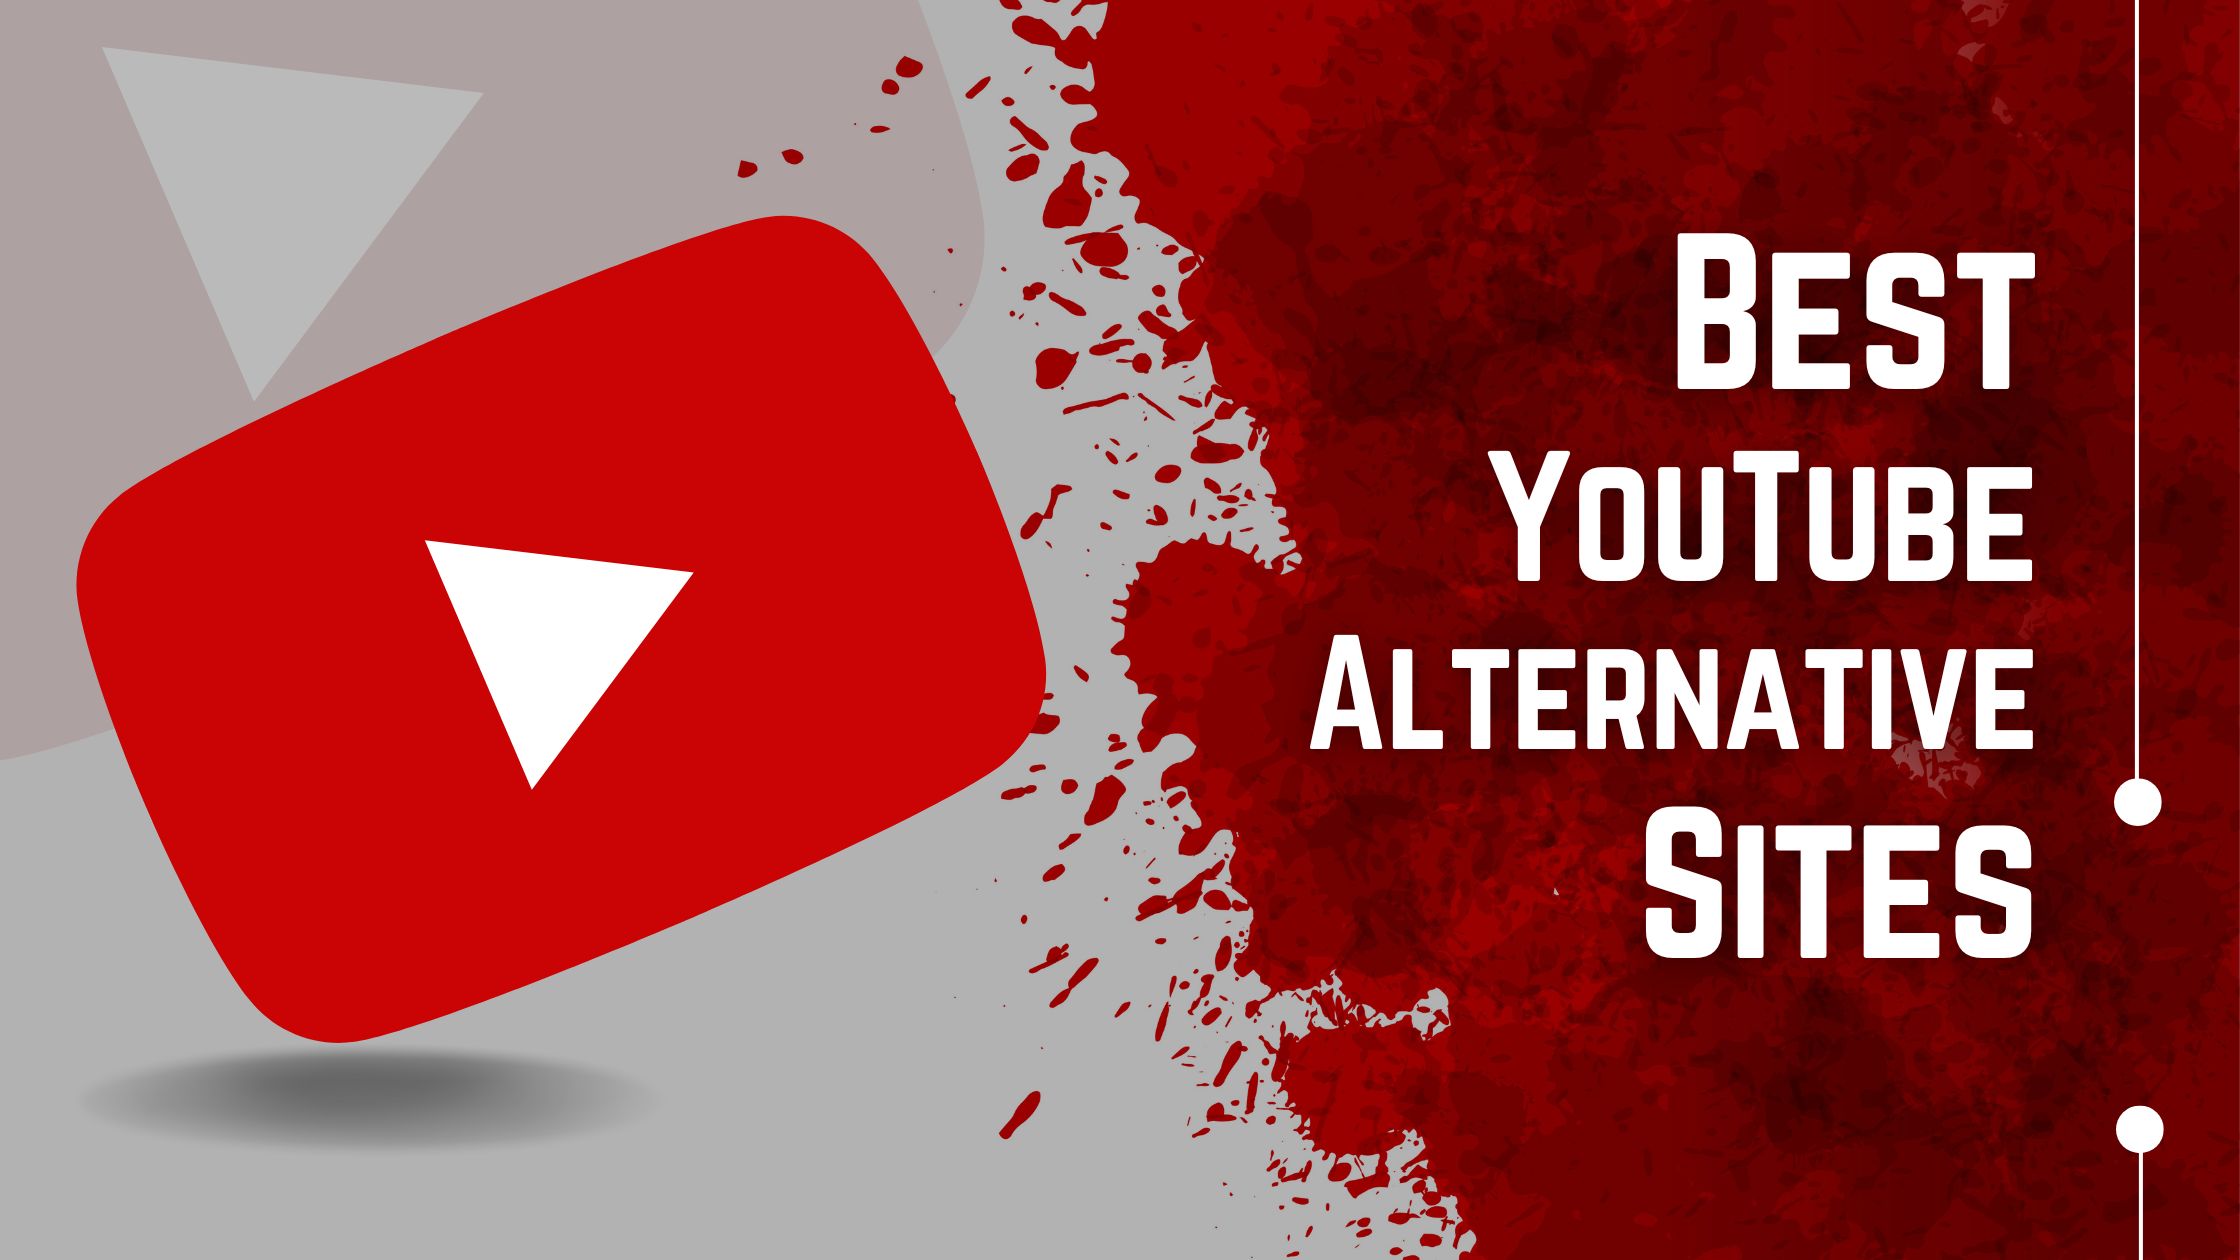 YouTube Alternative Sites